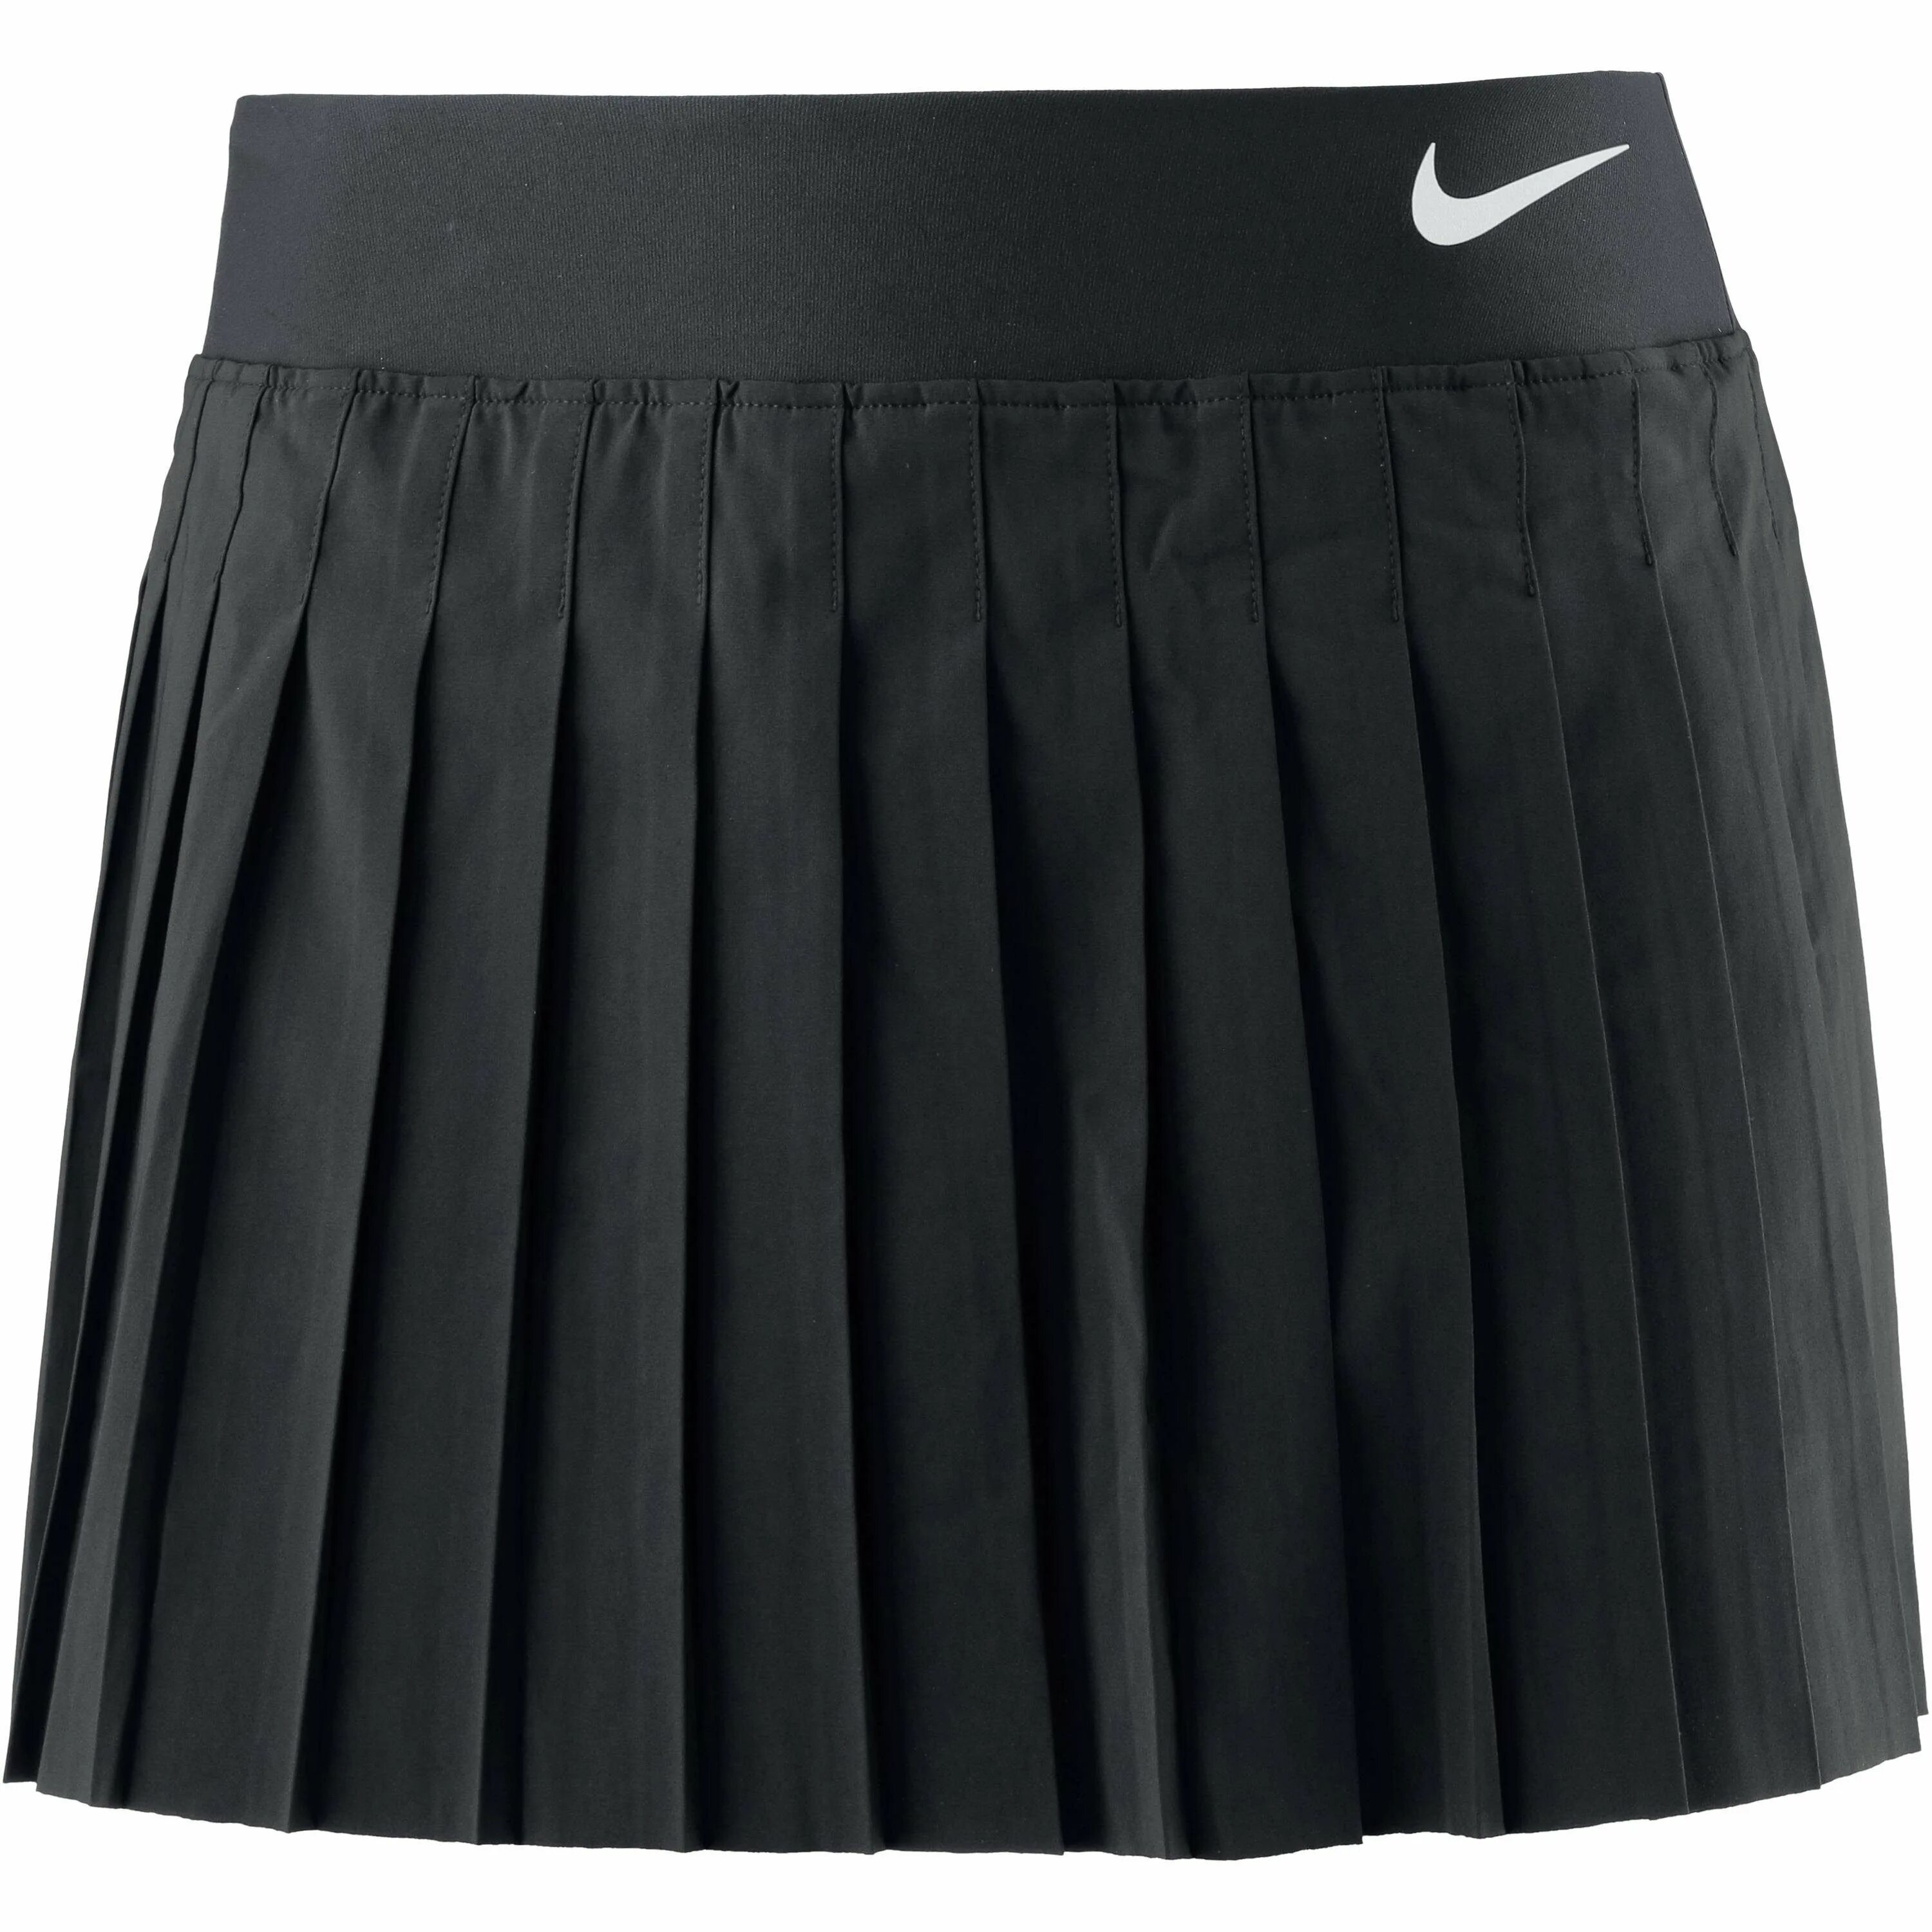 W6235r Black теннисная юбка Alo. Befree юбка теннисная черная. Теннисная юбка 2020 тренд. Теннисная юбка Ив сен Лоран. Юбки черные магазин